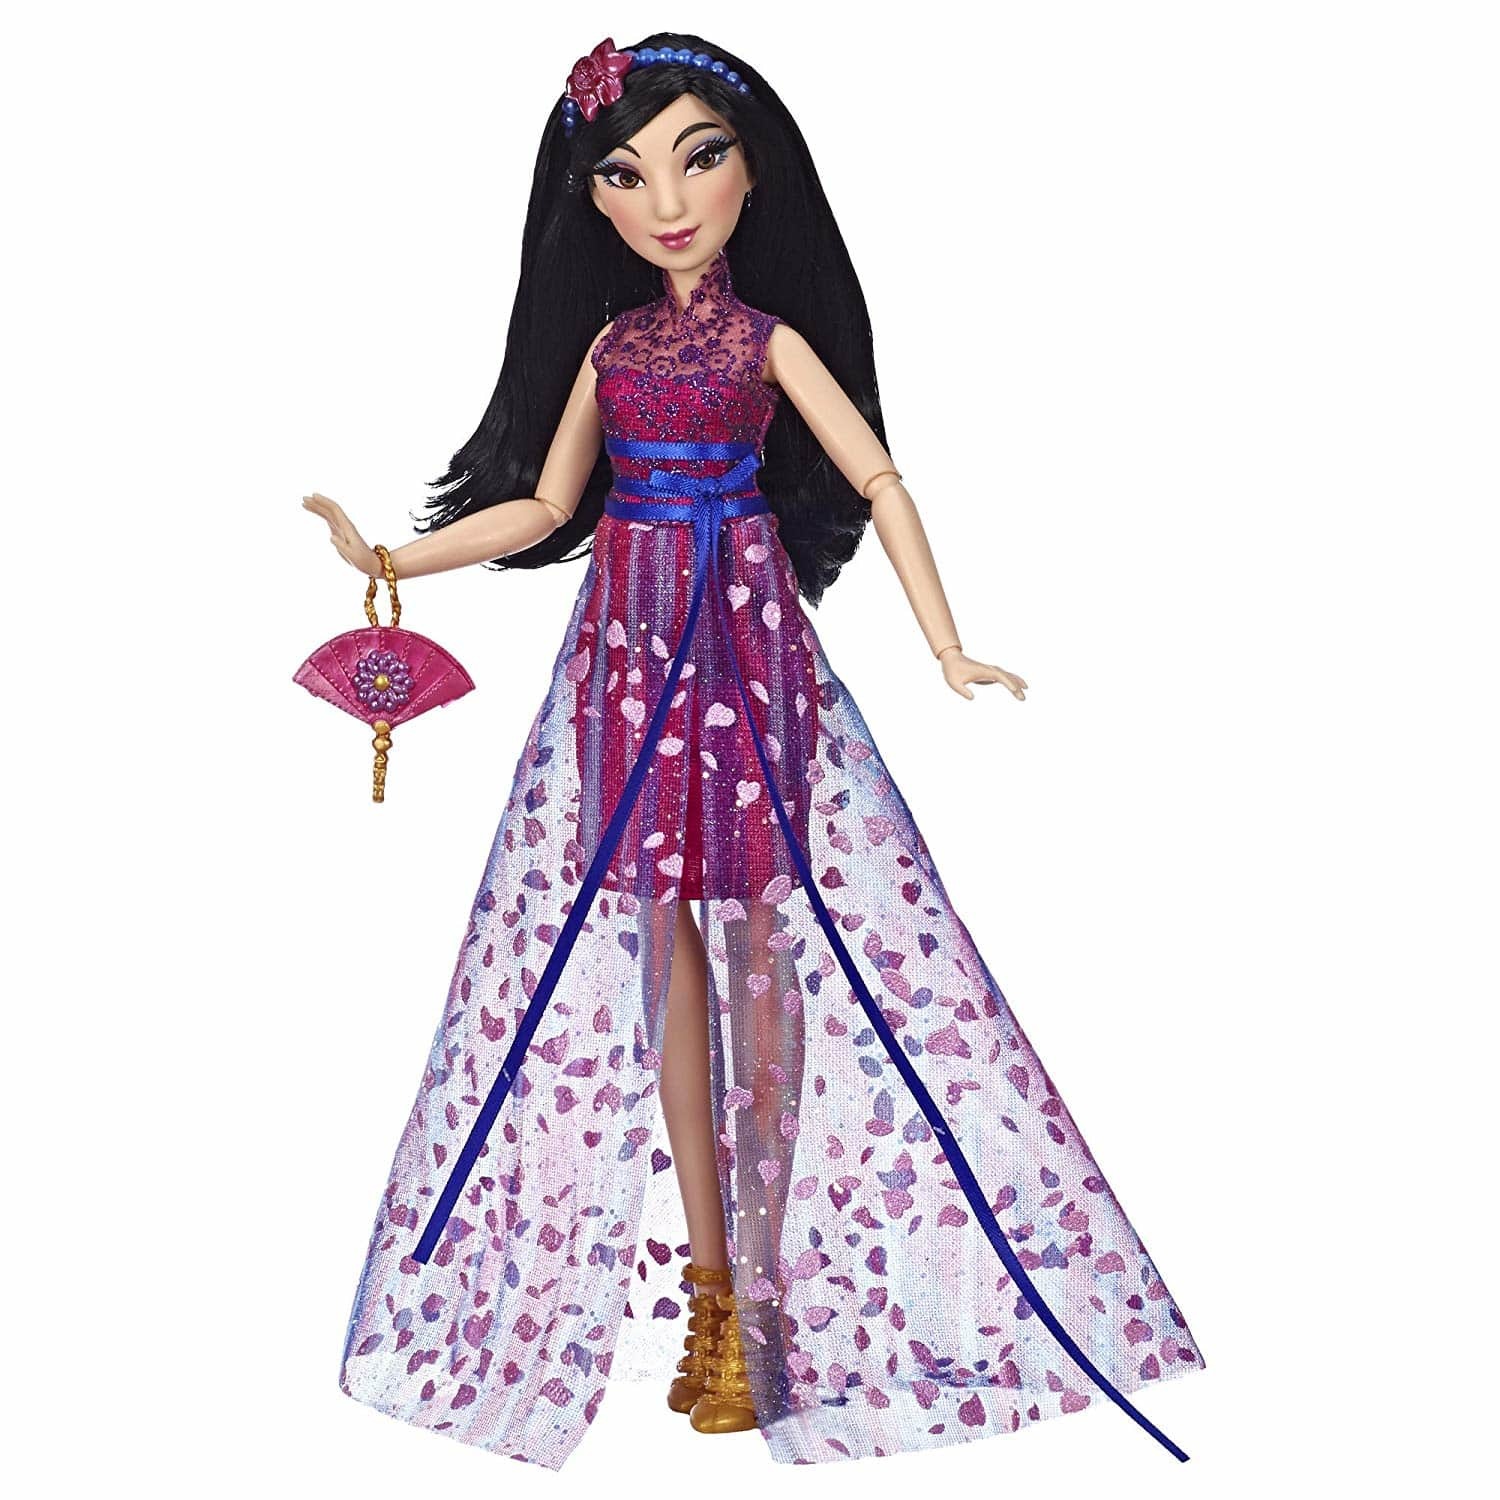 Коллекционная кукла Disney Princess Мулан